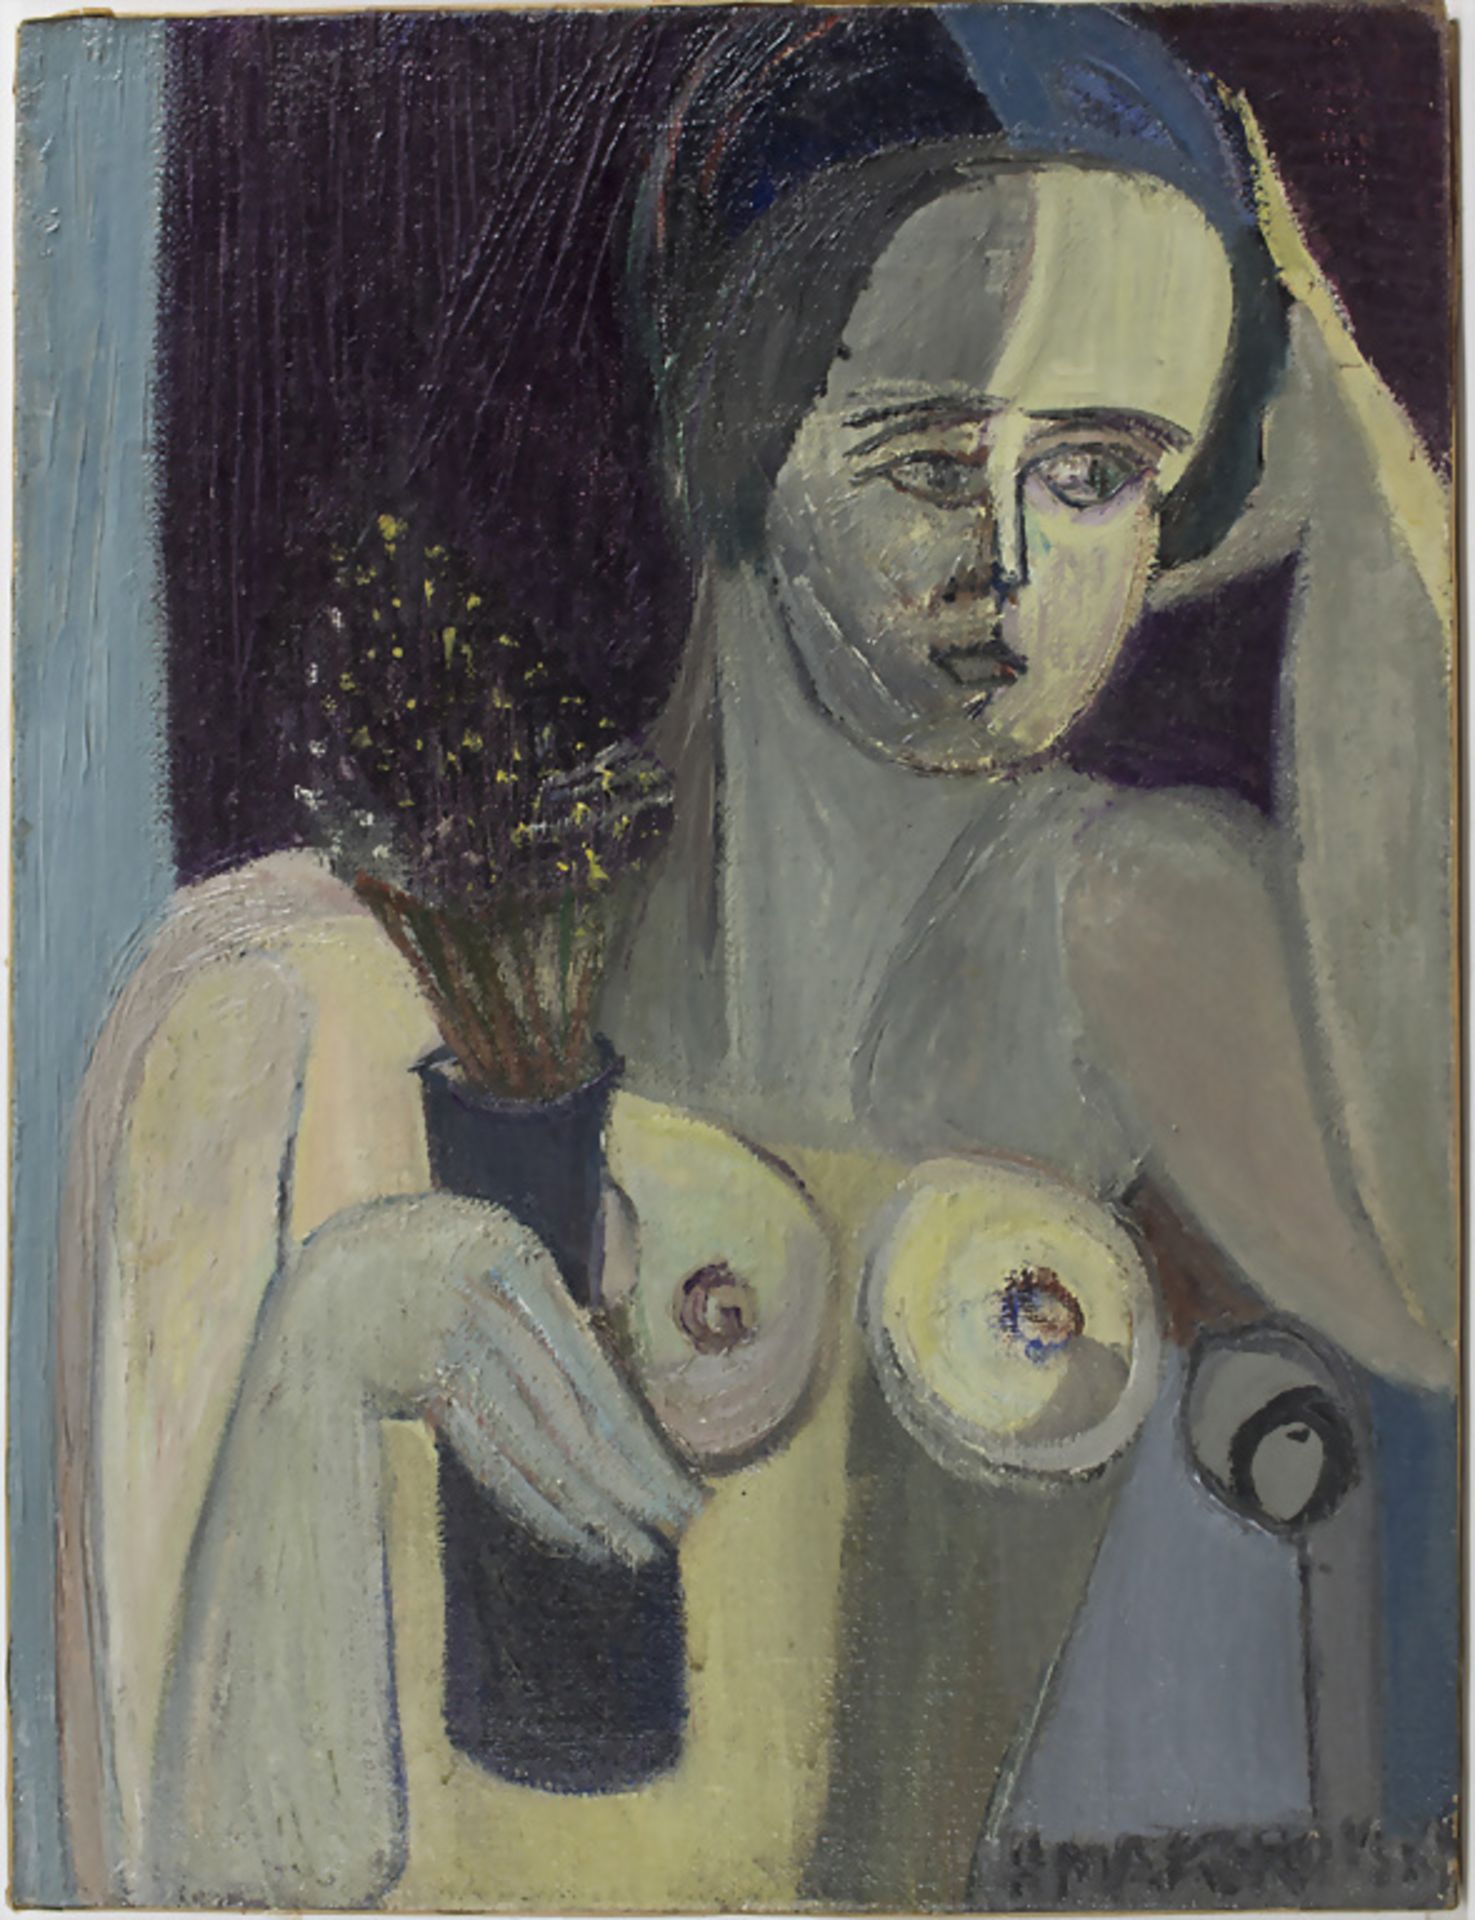 Hélène MAKAROVSKY, 'Akt mit Blumenstrauss' / 'A nude with flowers', um 1950